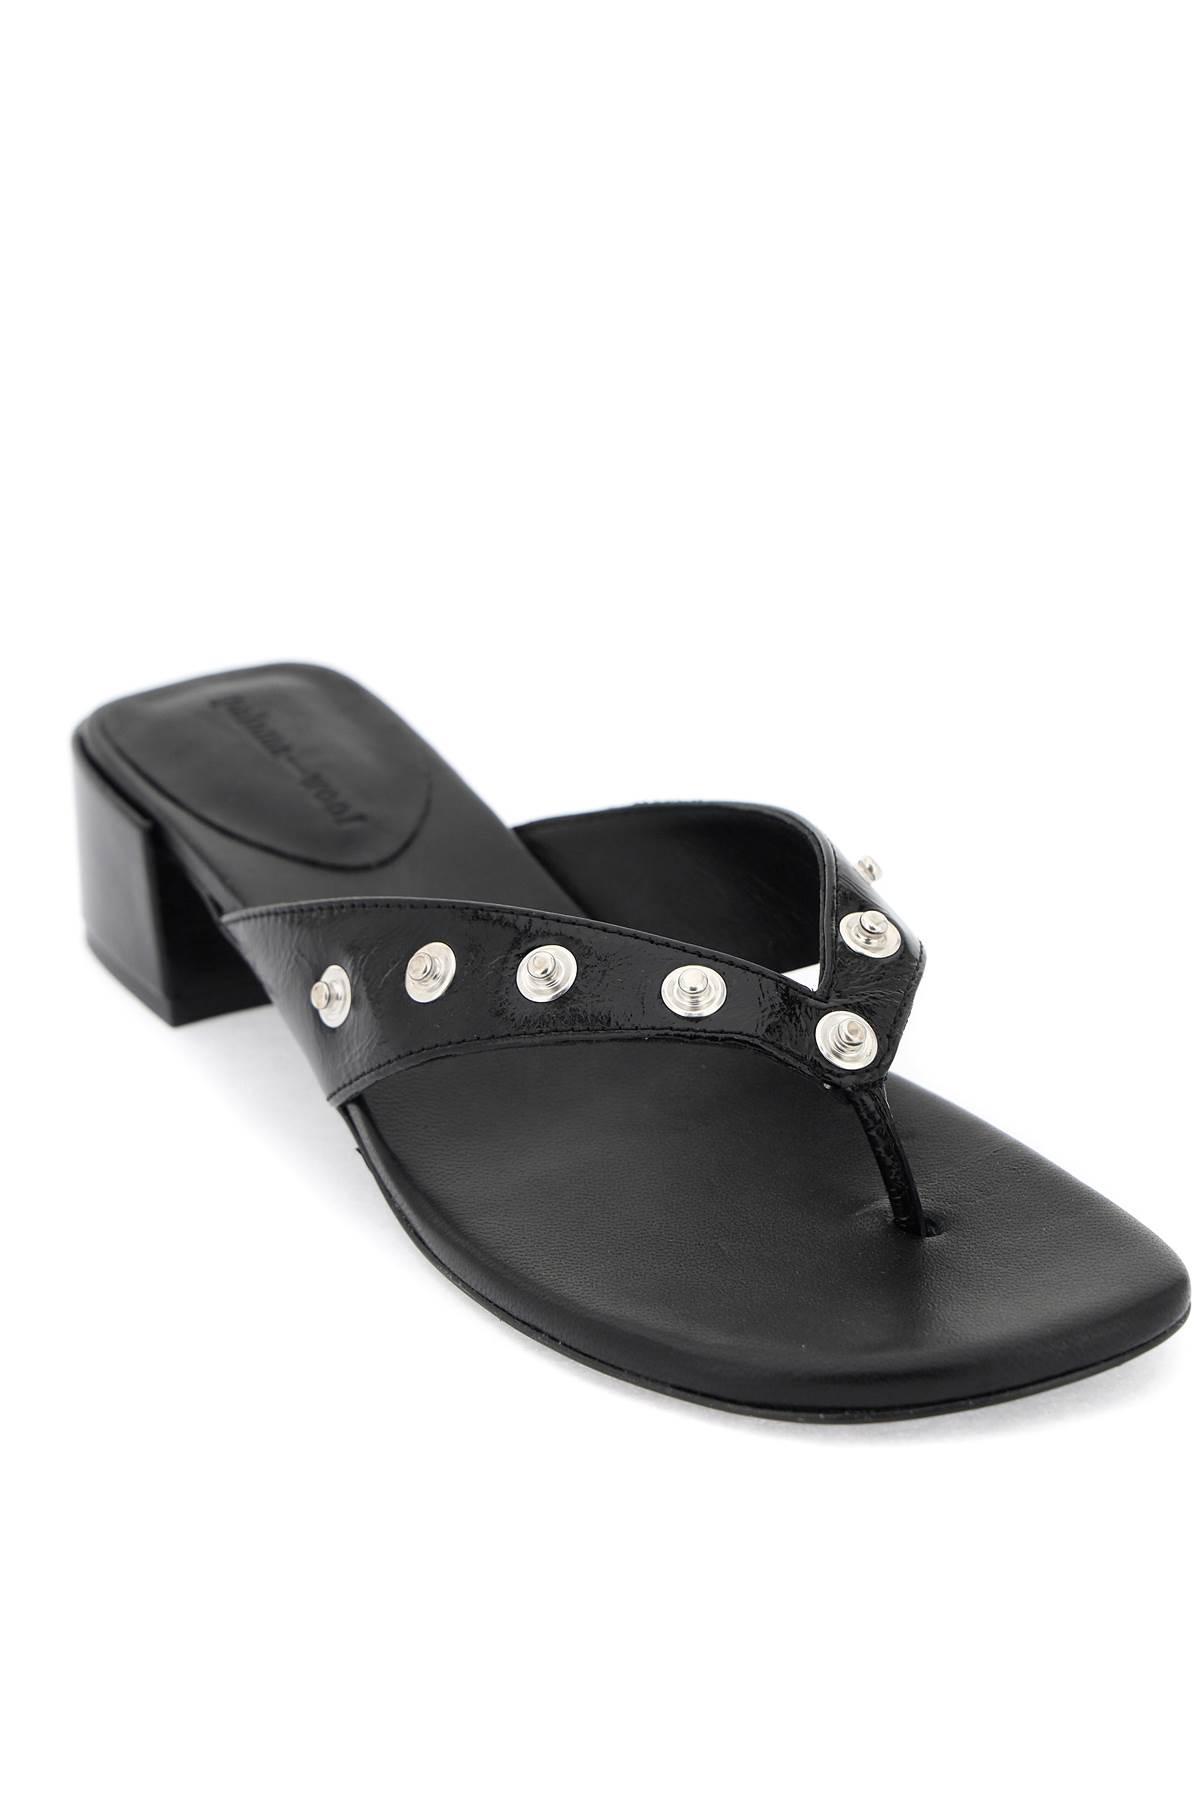 PALOMA WOOL PALOMA WOOL Studded flip-flop sandals